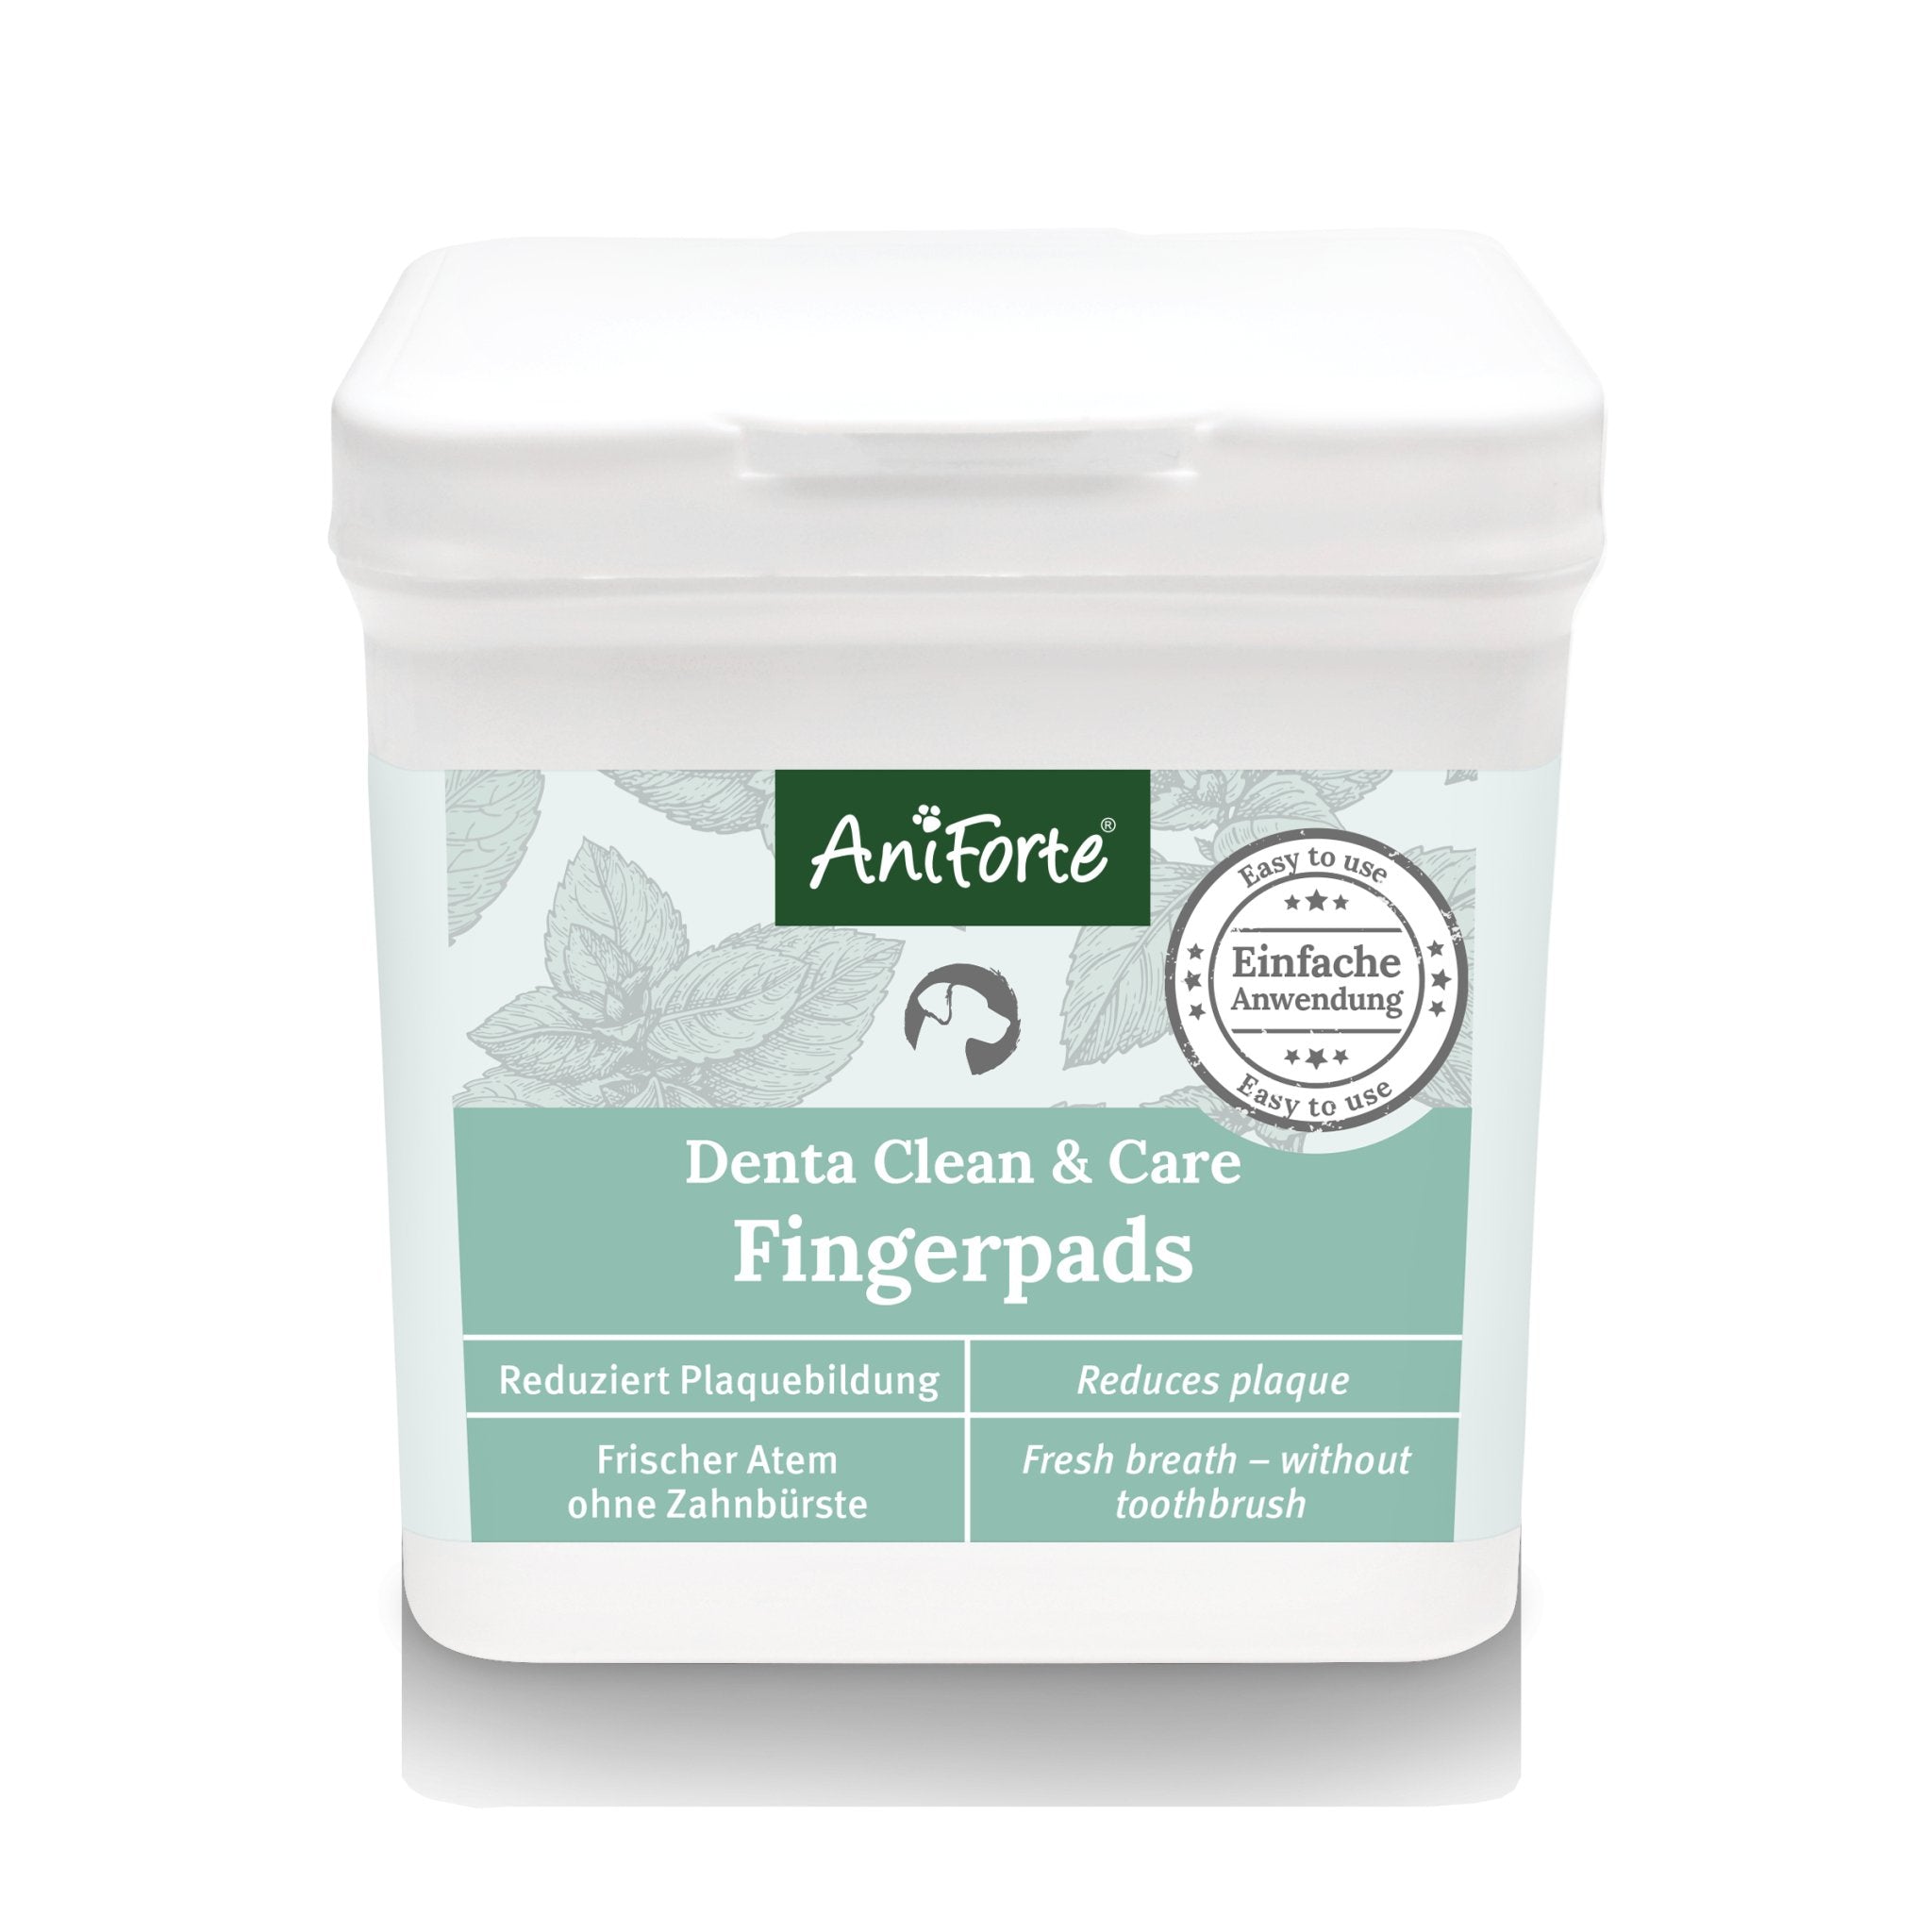 Denta Clean & Care Fingerpads - 50 Pieces - AniForte UK